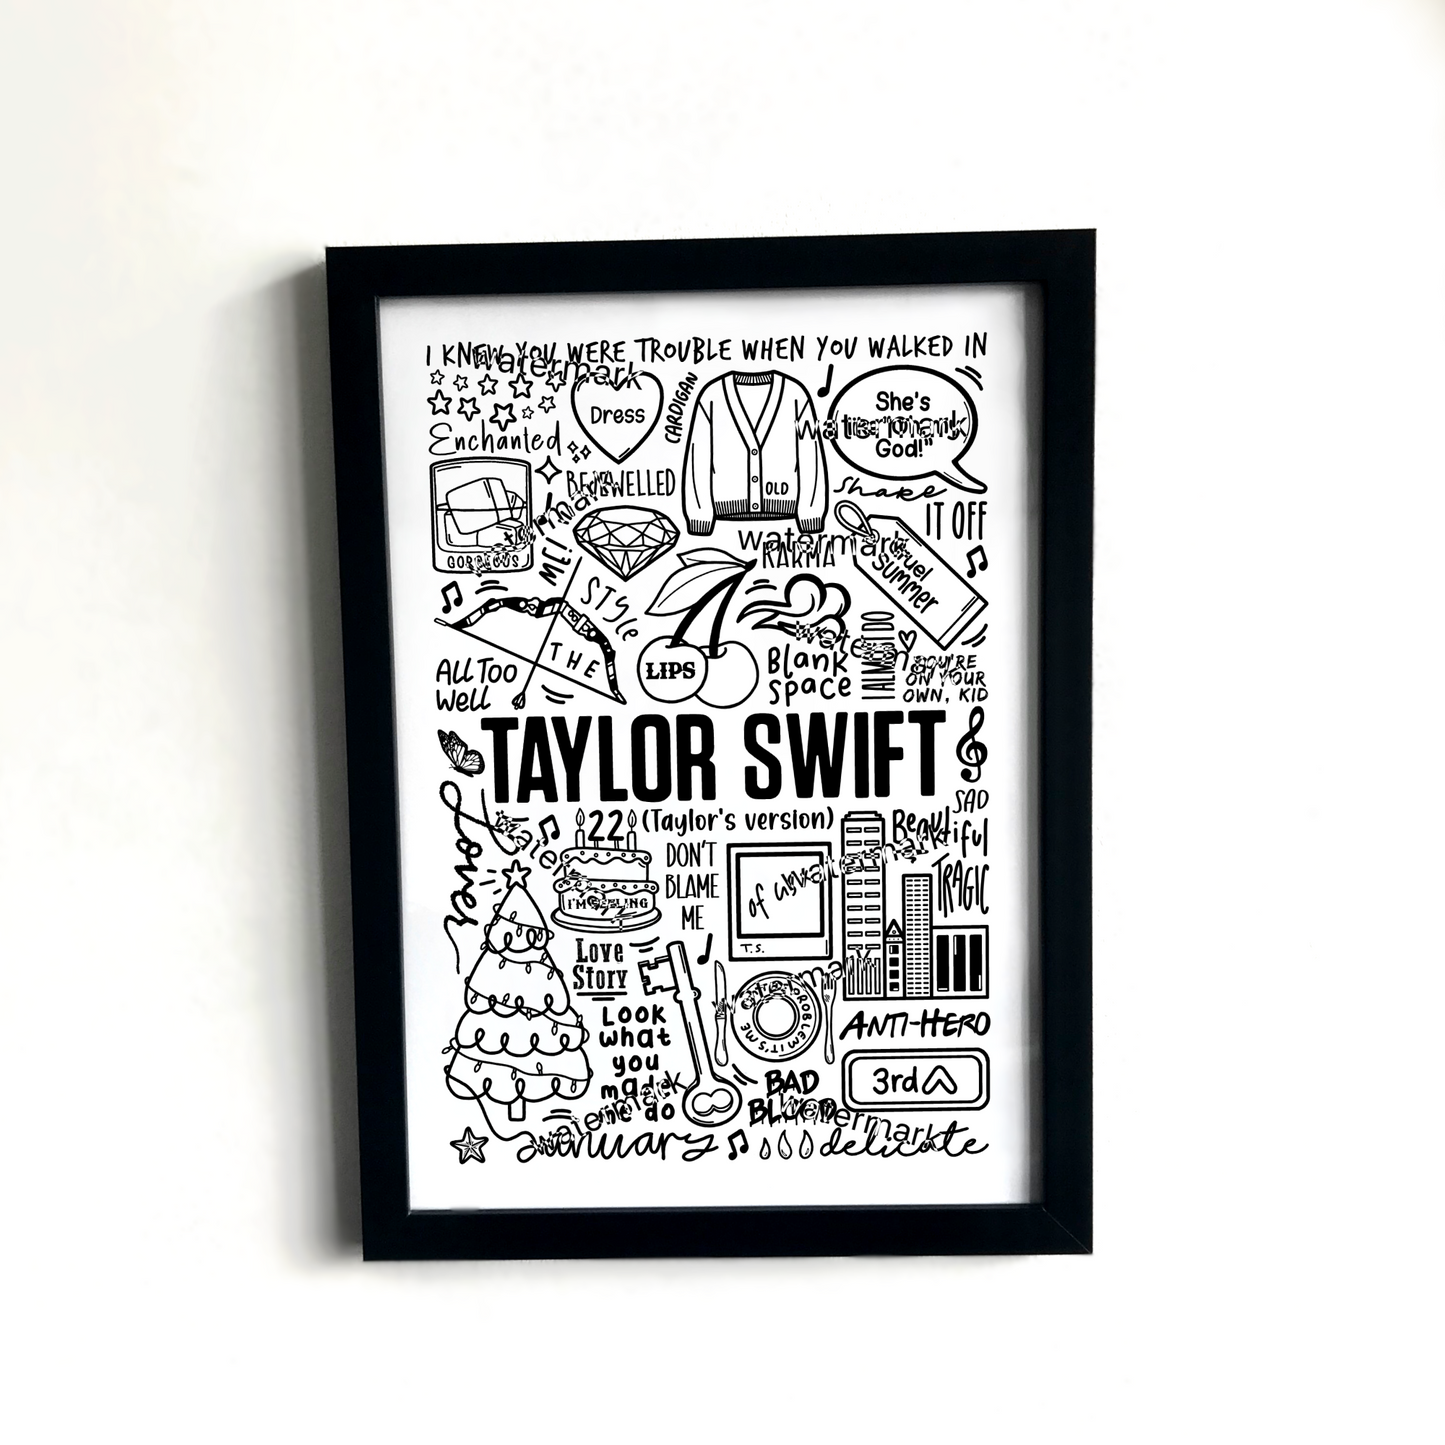 Taylor Swift print